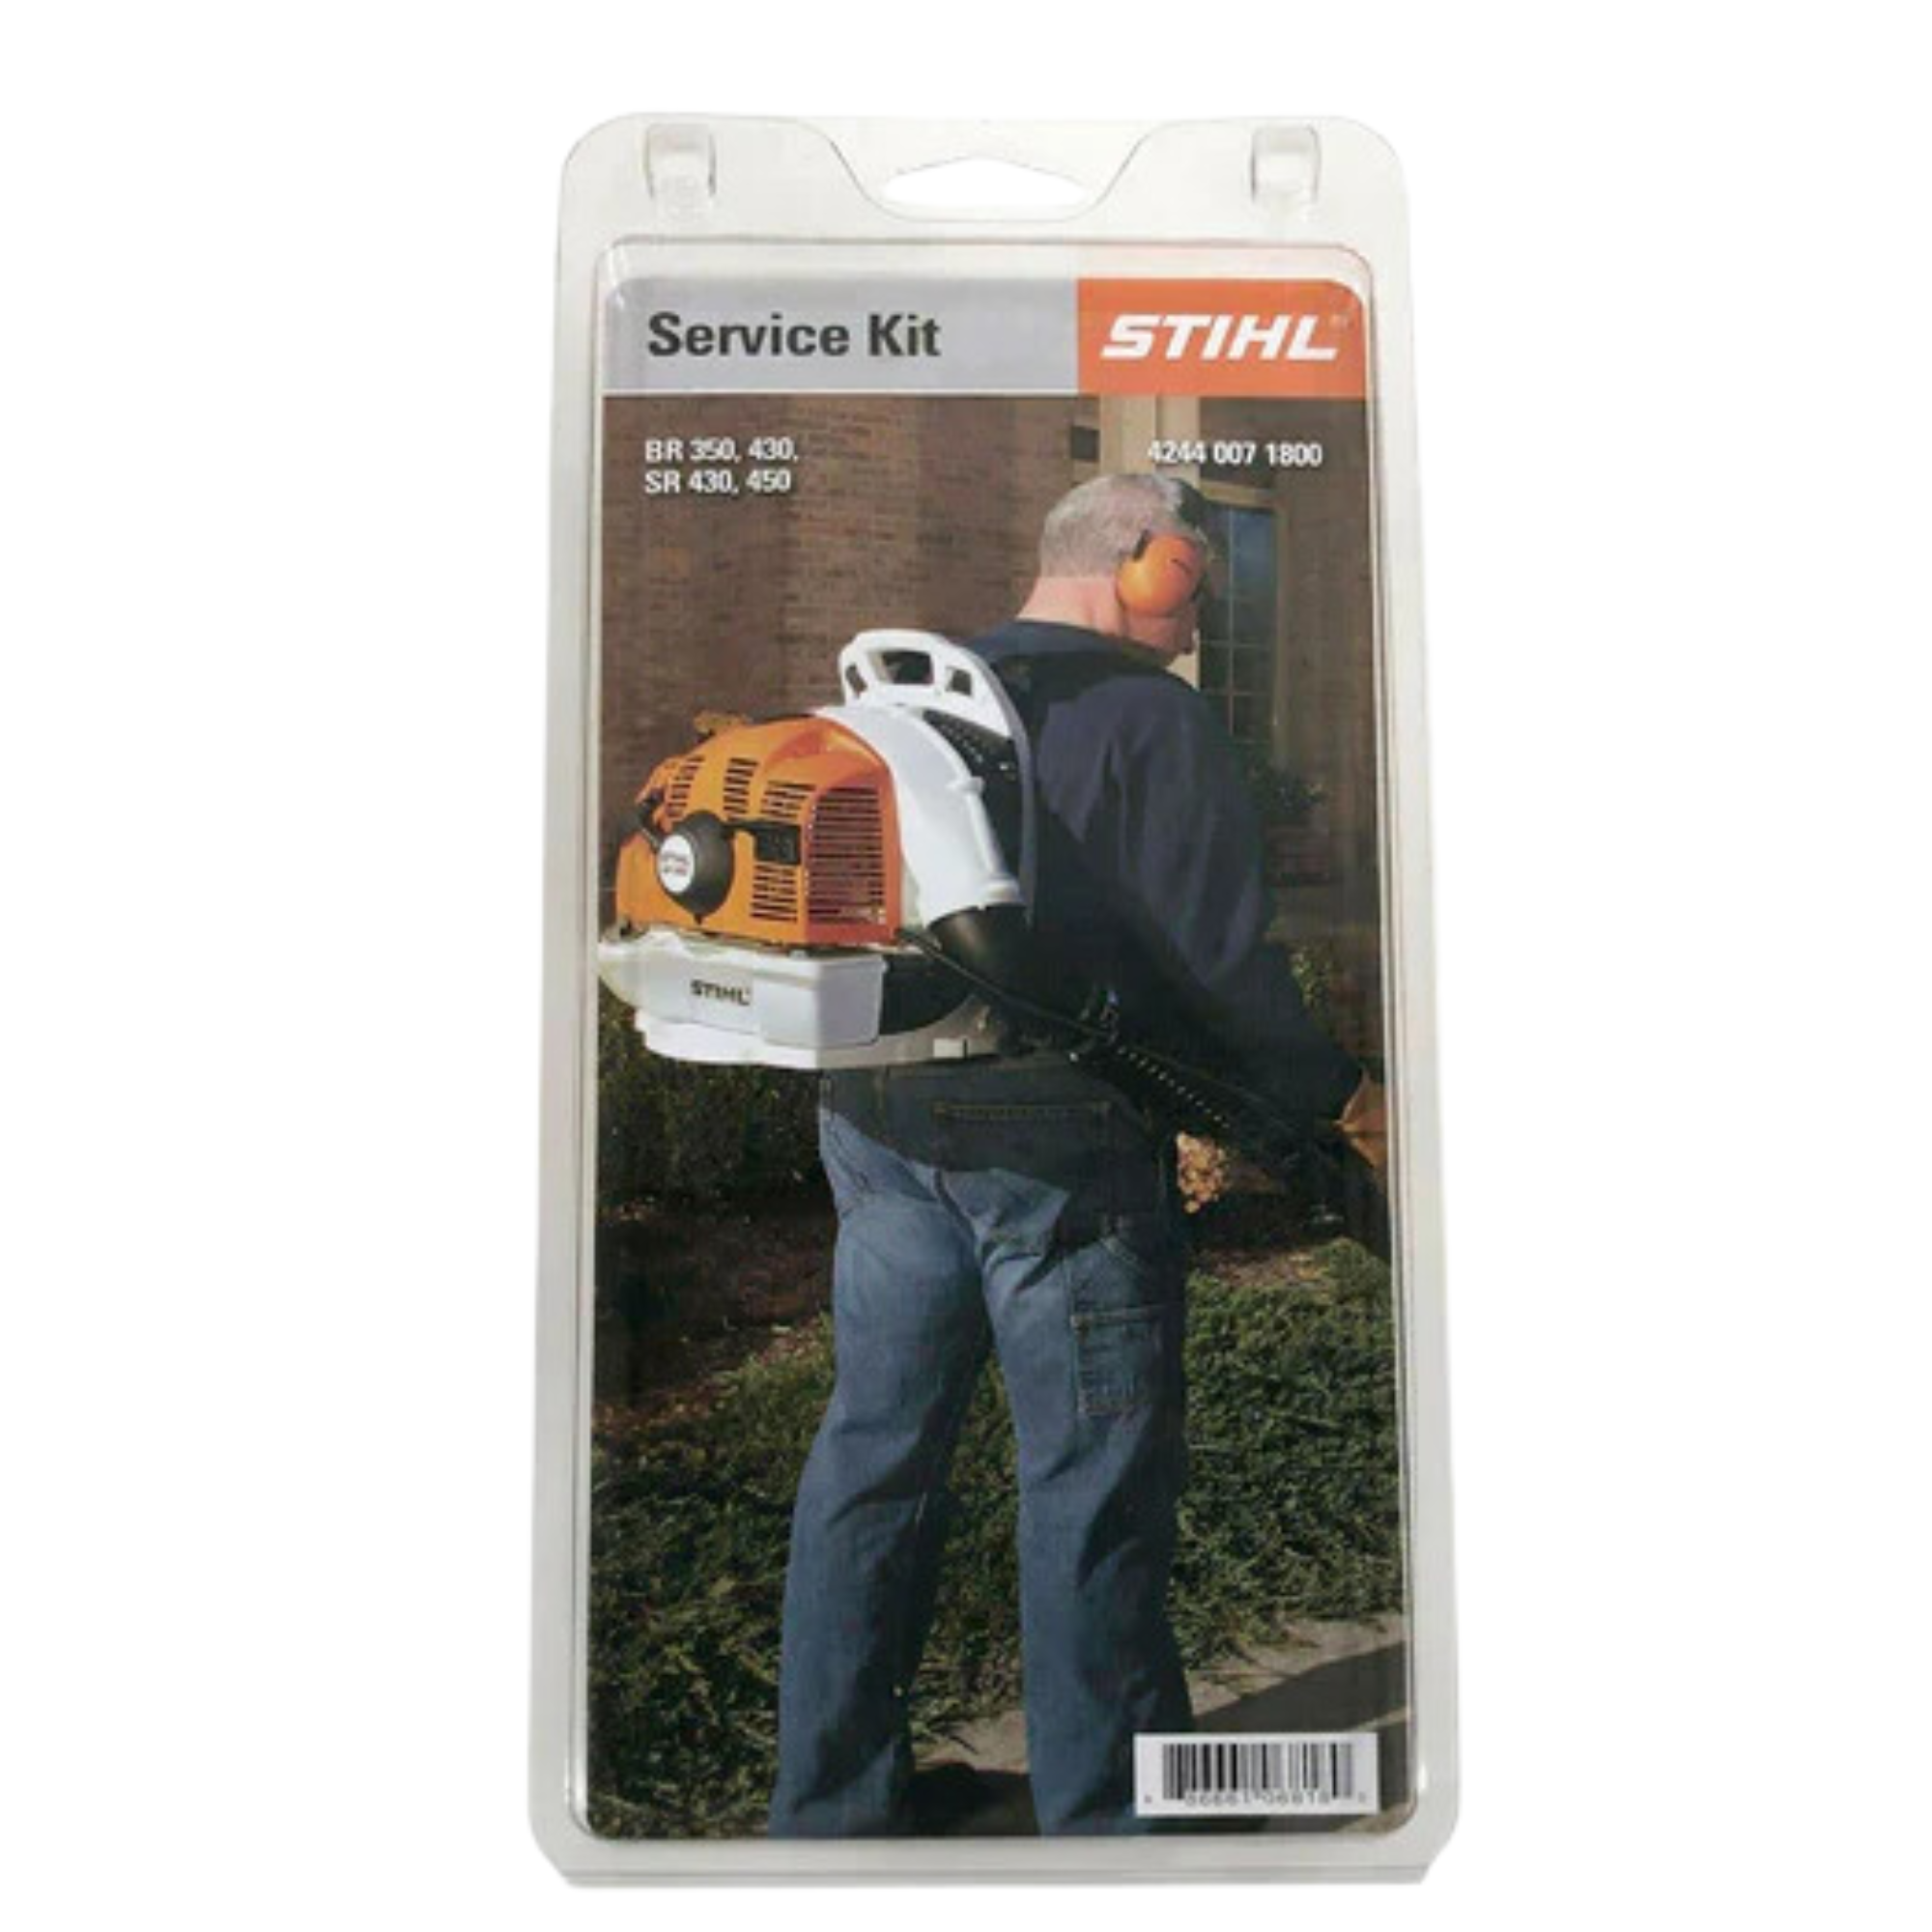 Stihl Blower Service Kit 4244 Series | 4244 007 1800